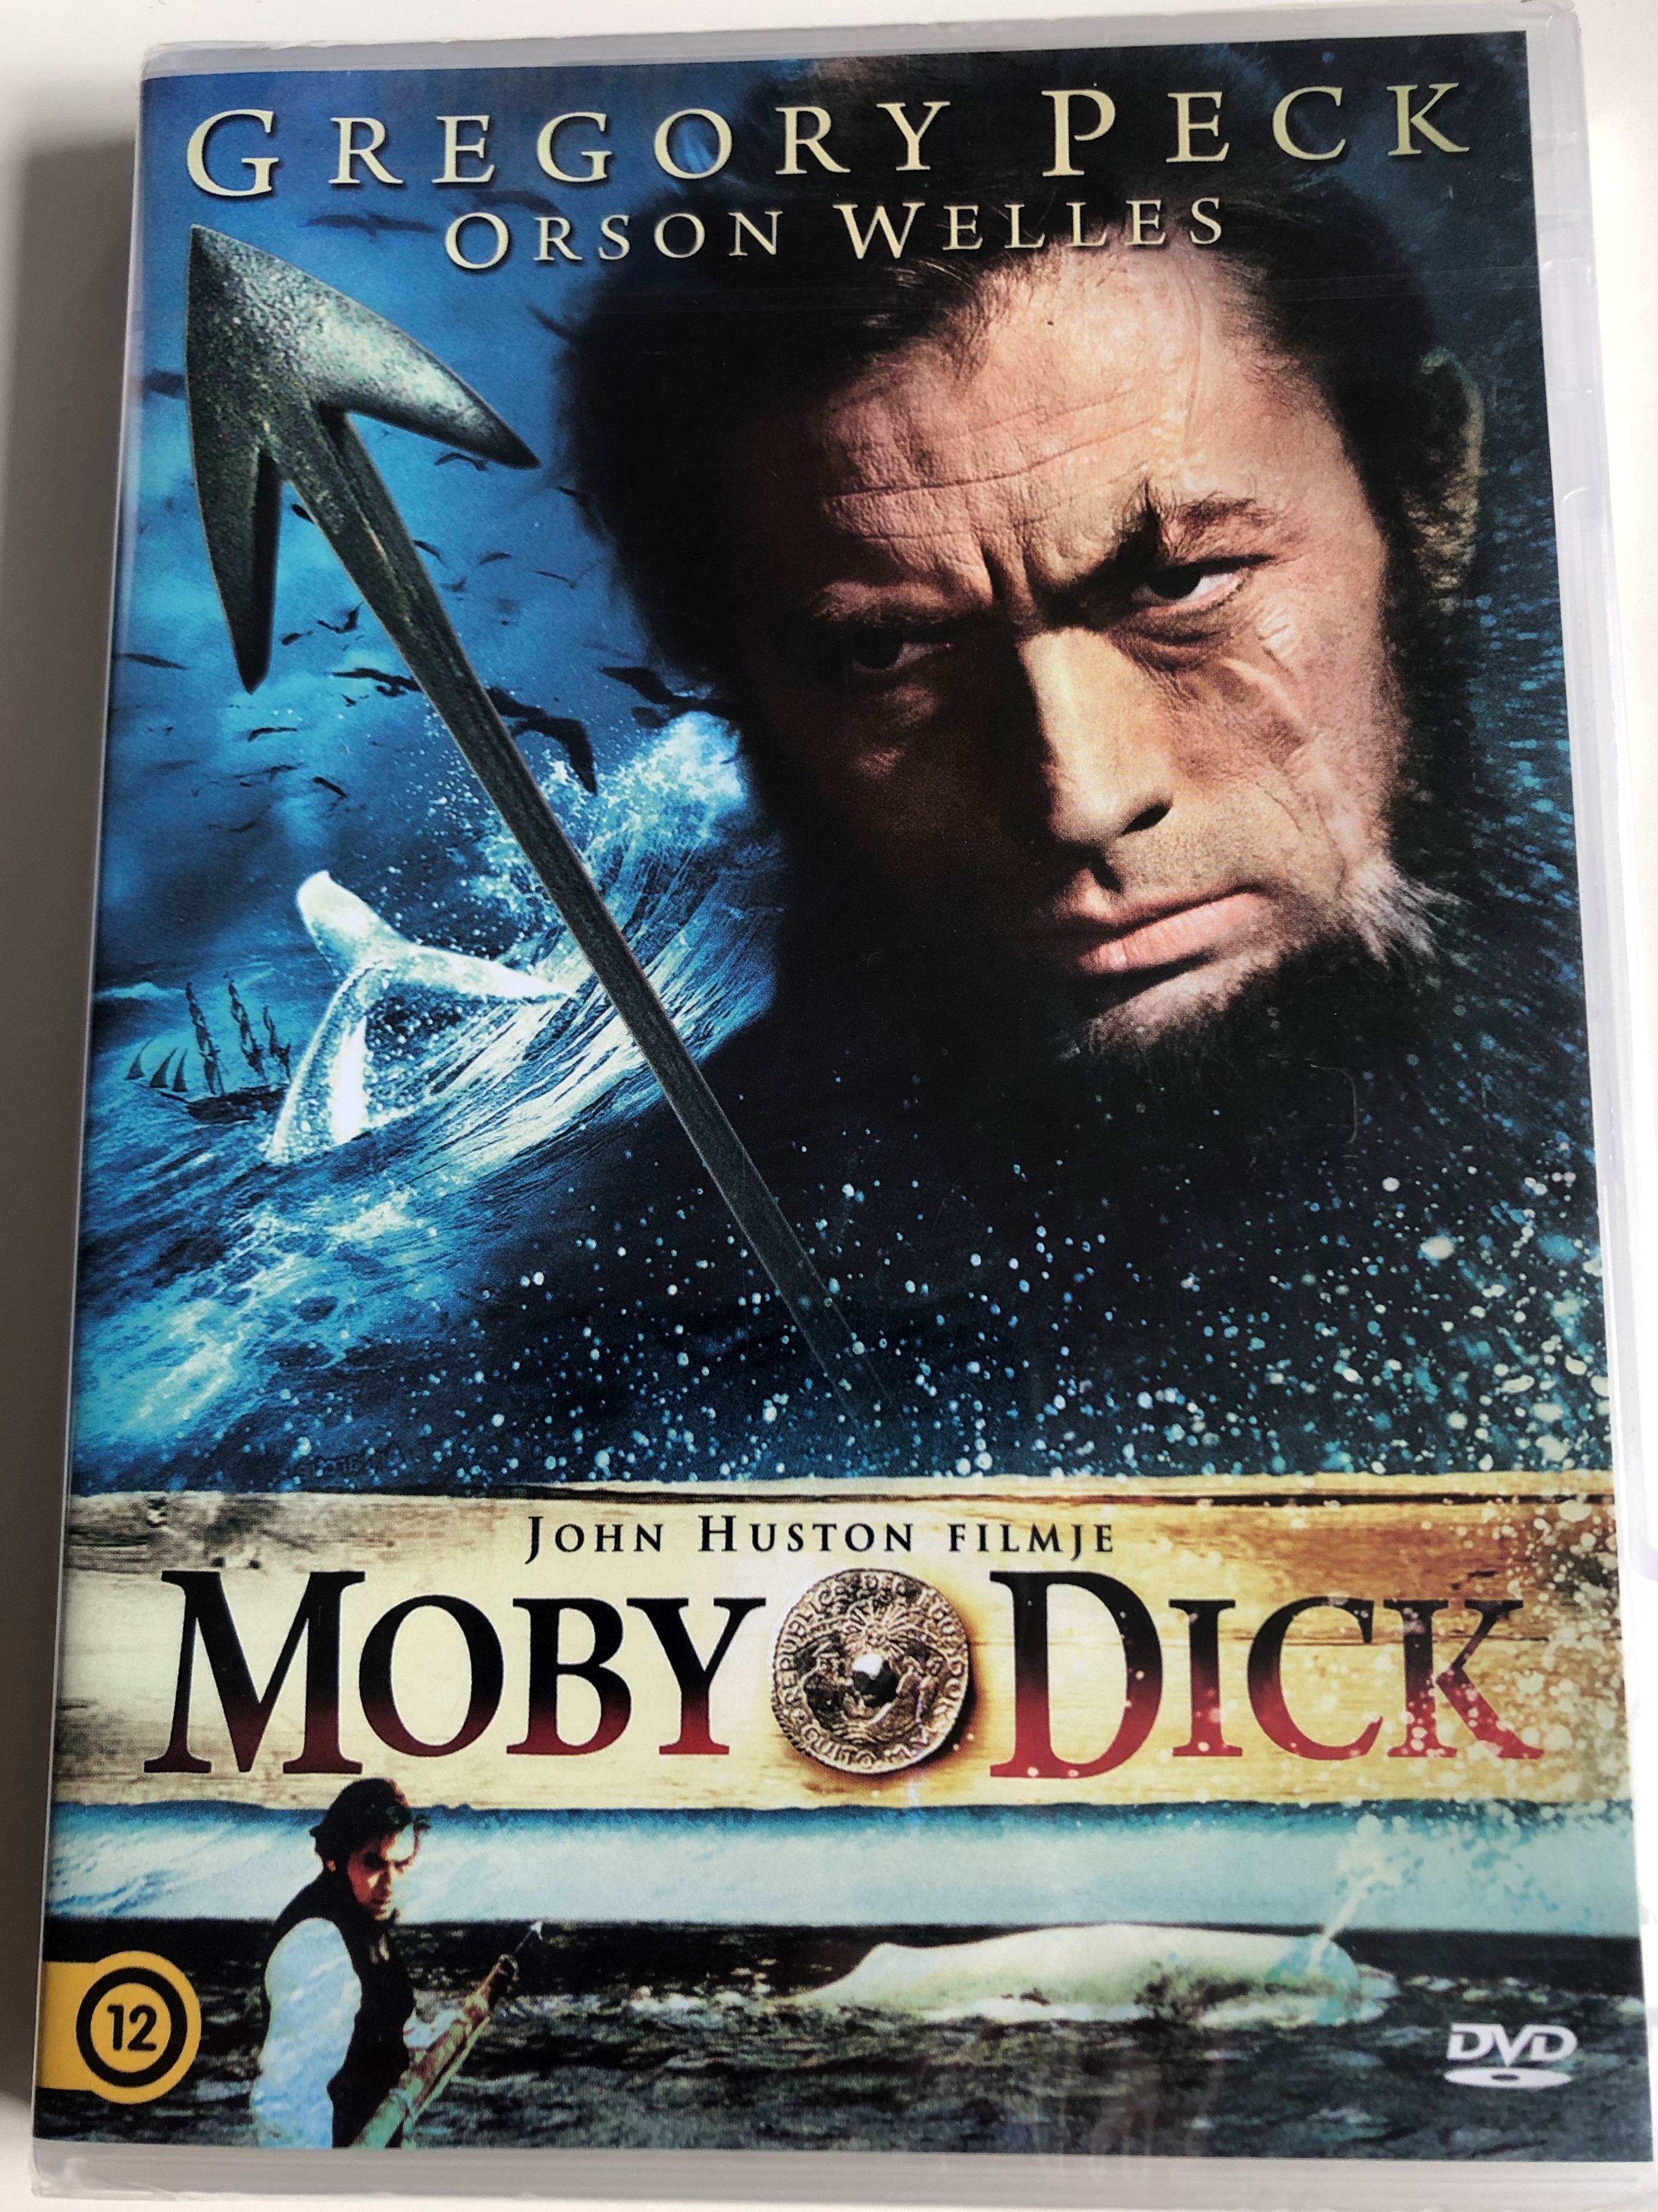 moby-dick-dvd-1956-directed-by-john-houston-starring-gregory-peck-richard-basehart-leo-genn-orson-welles-film-adaptation-of-literary-classic-by-herman-melville-1-.jpg